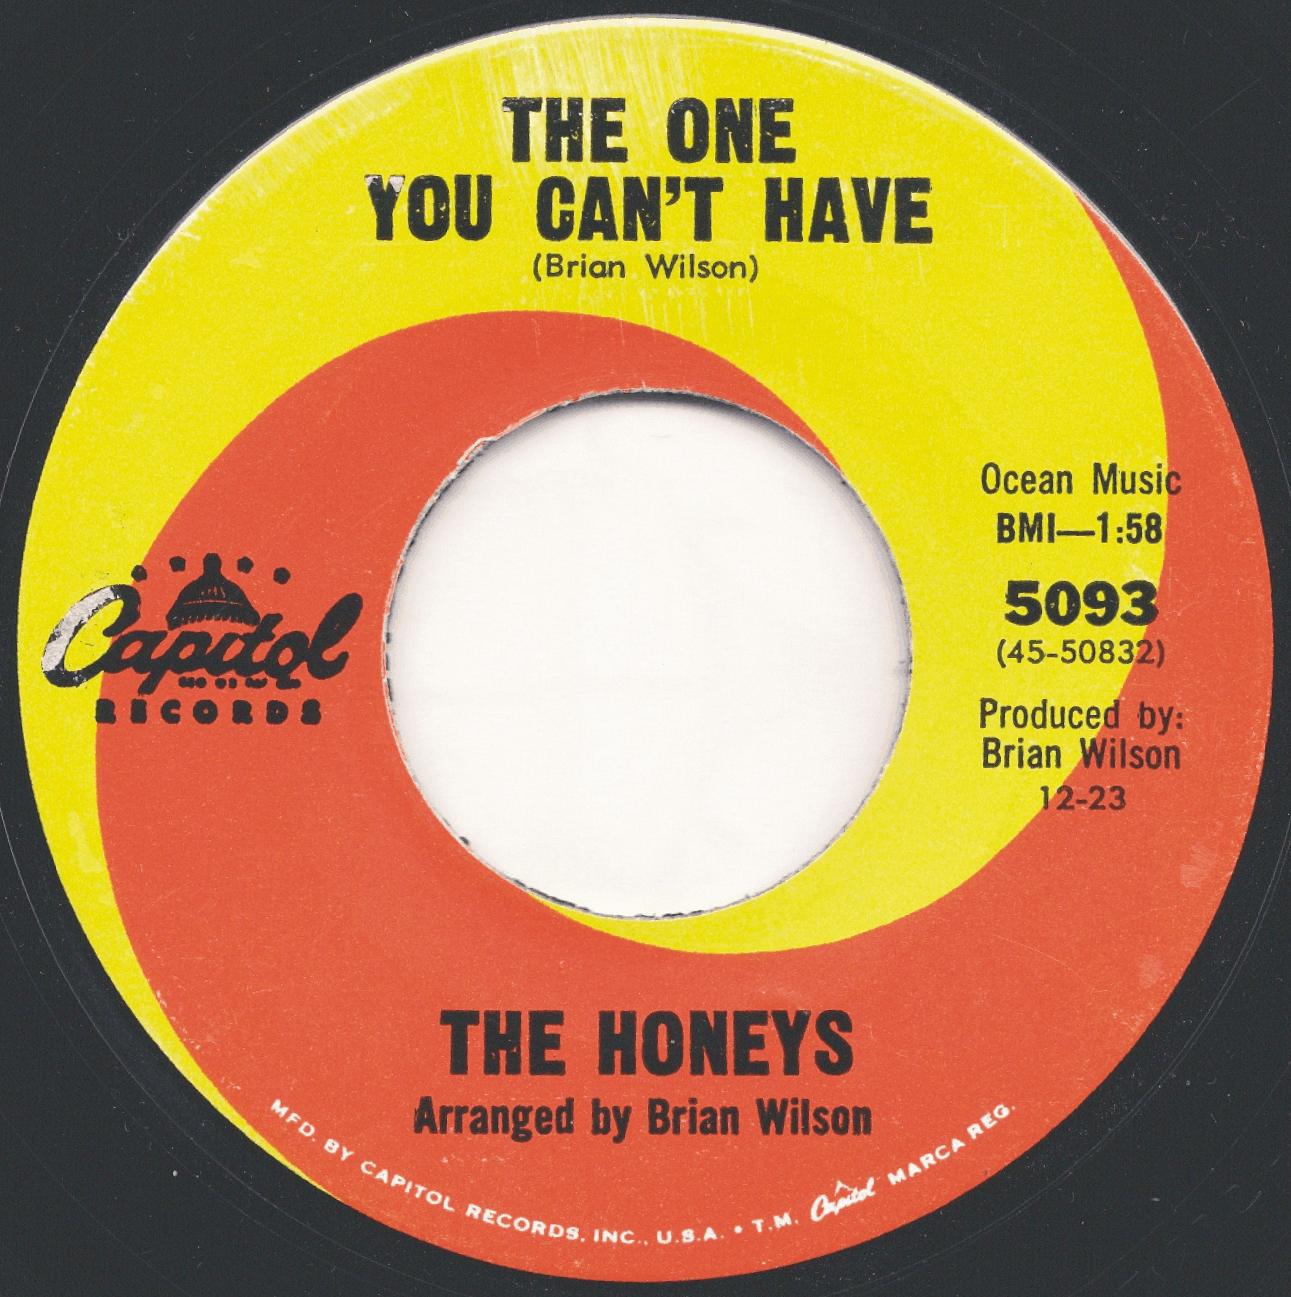 Beach Boys on 45 - US Regular issues - Brian Wilson productions - The Honeys